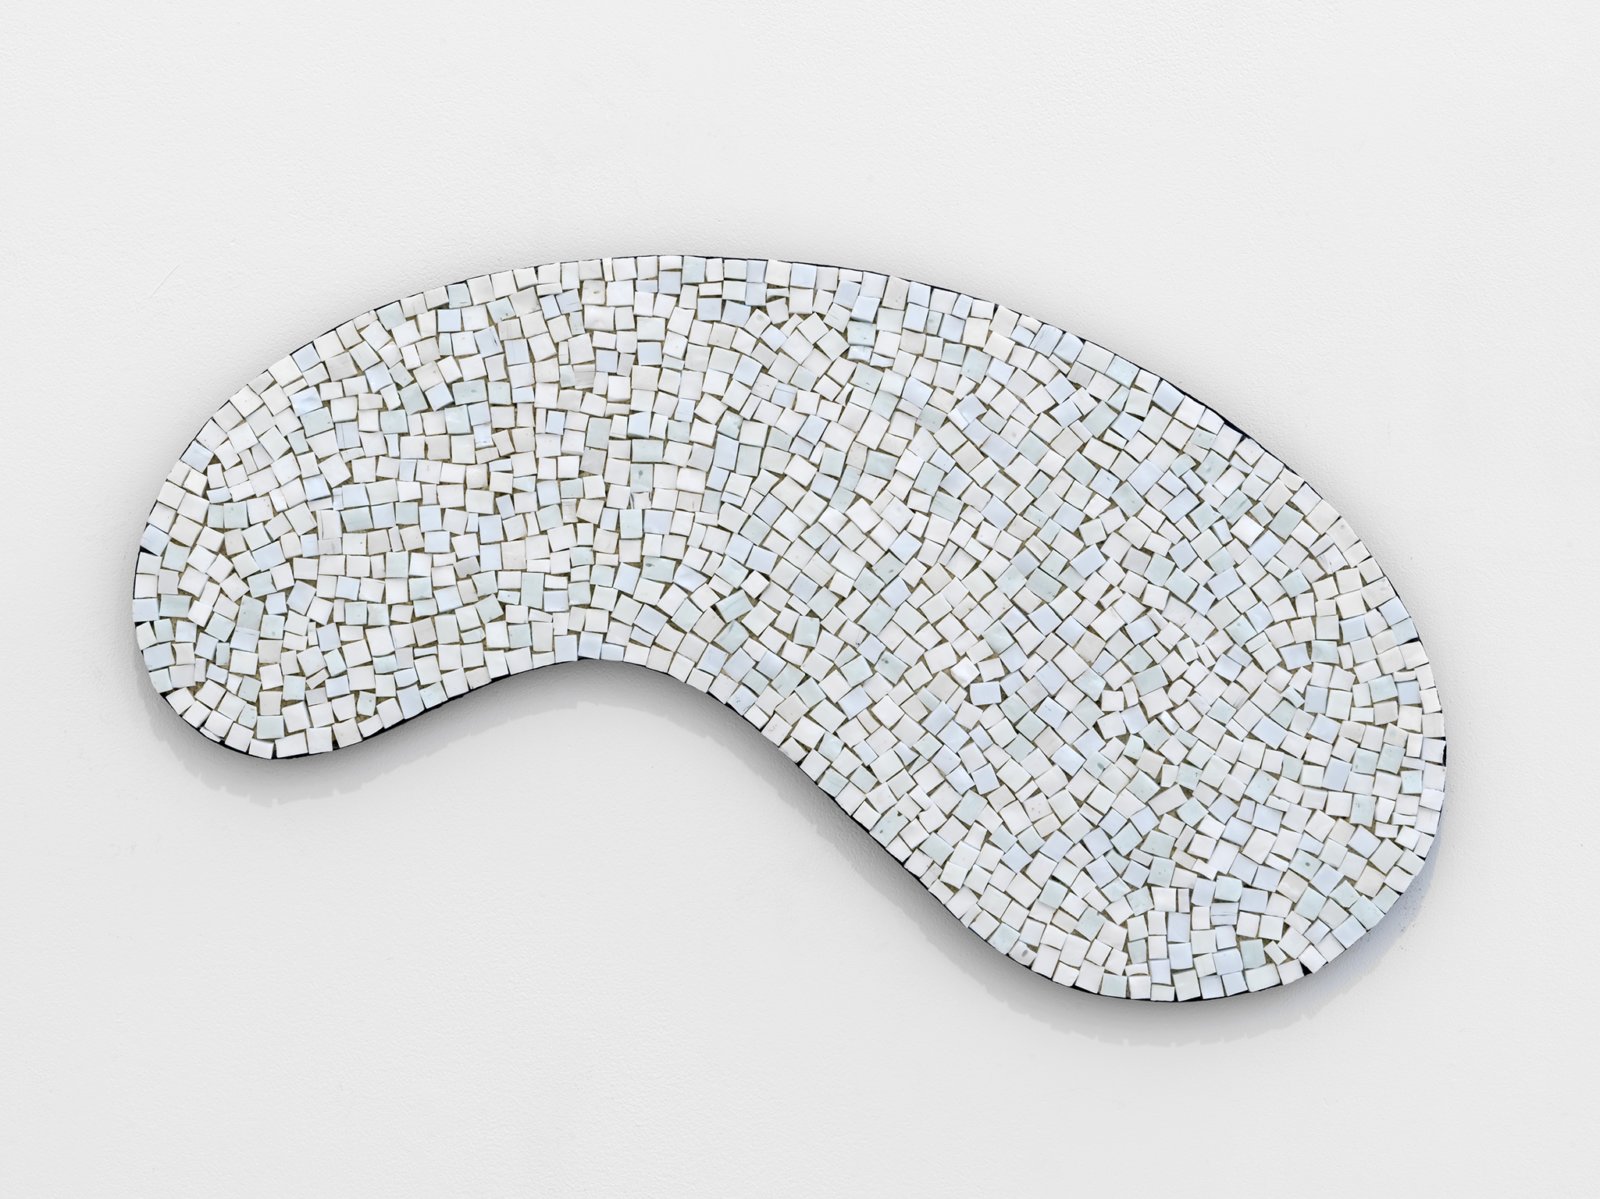 Janice Kerbel, Pool, 2018, mosaic, 11 x 21 in. (28 x 54 cm). Installation view, greengrassi, London, UK, 2018